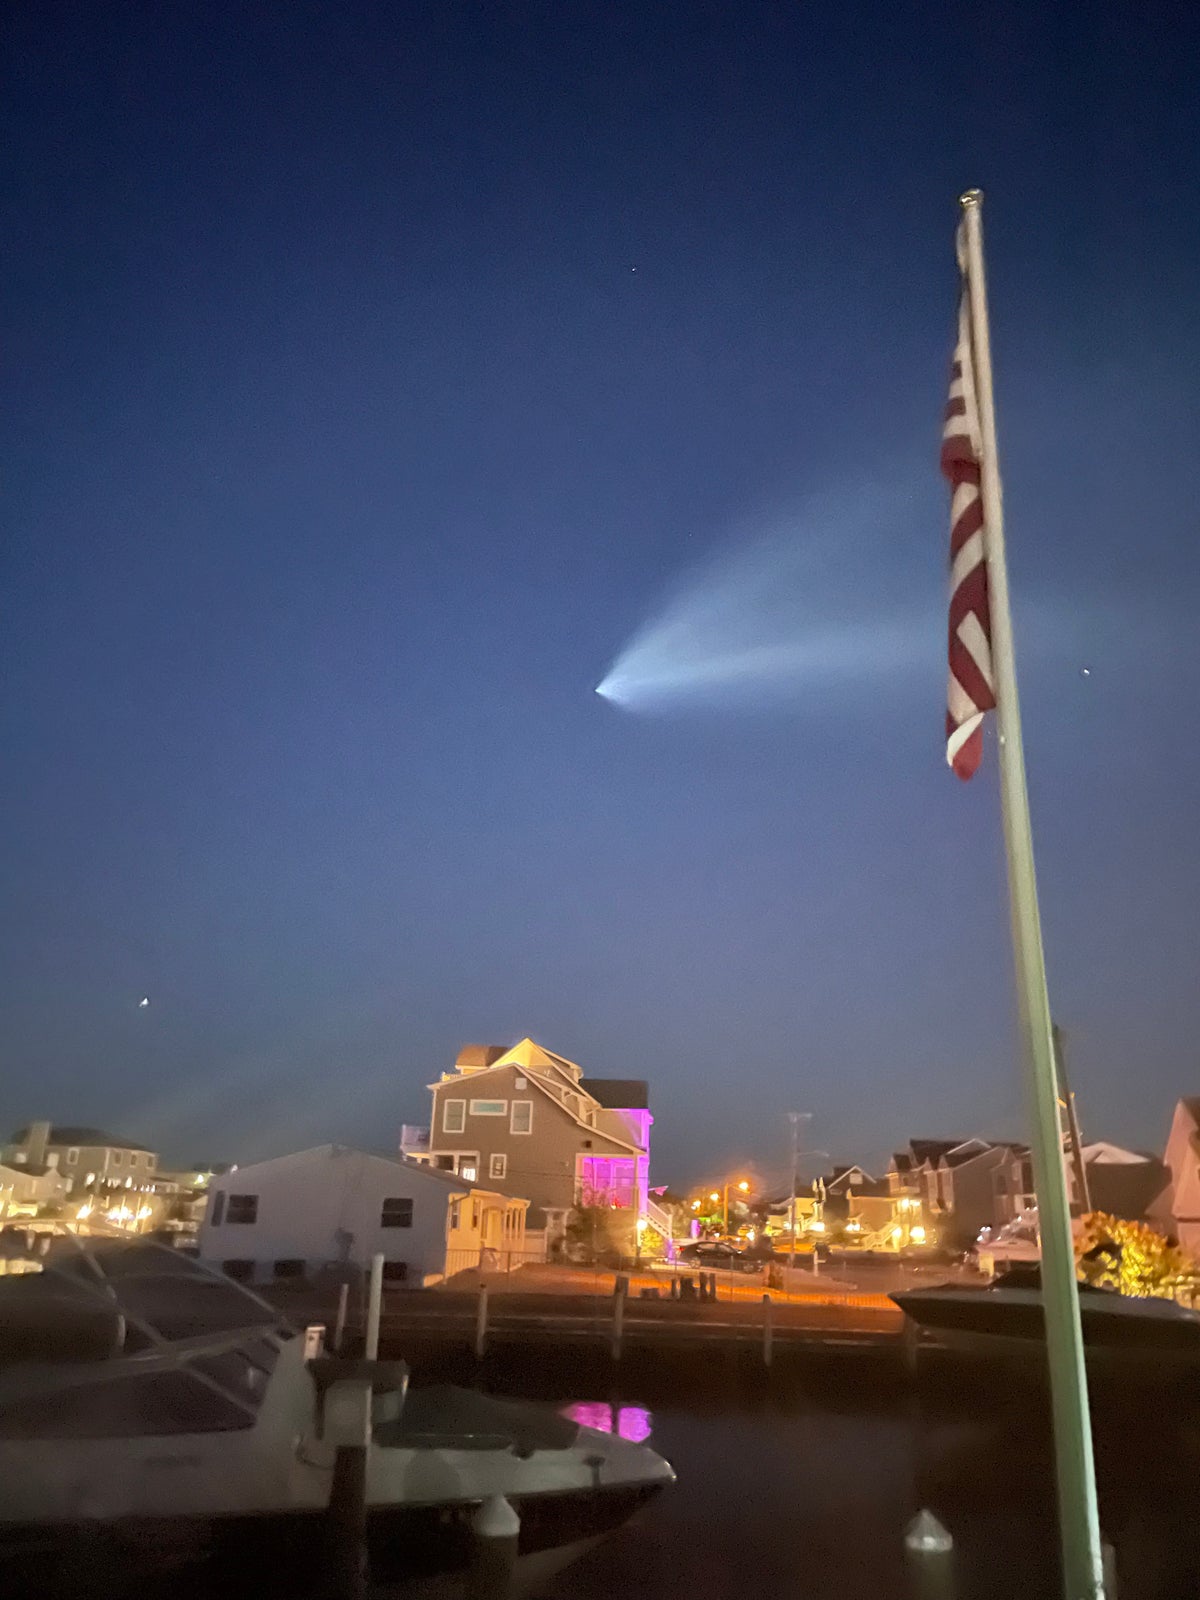 SpaceX Falcon 9 로켓의 톰스 강 위의 증기 흔적.  News 12 뷰어 쌍 뉴저지 뷰어 Michelle Arusha의 이미지 제공.